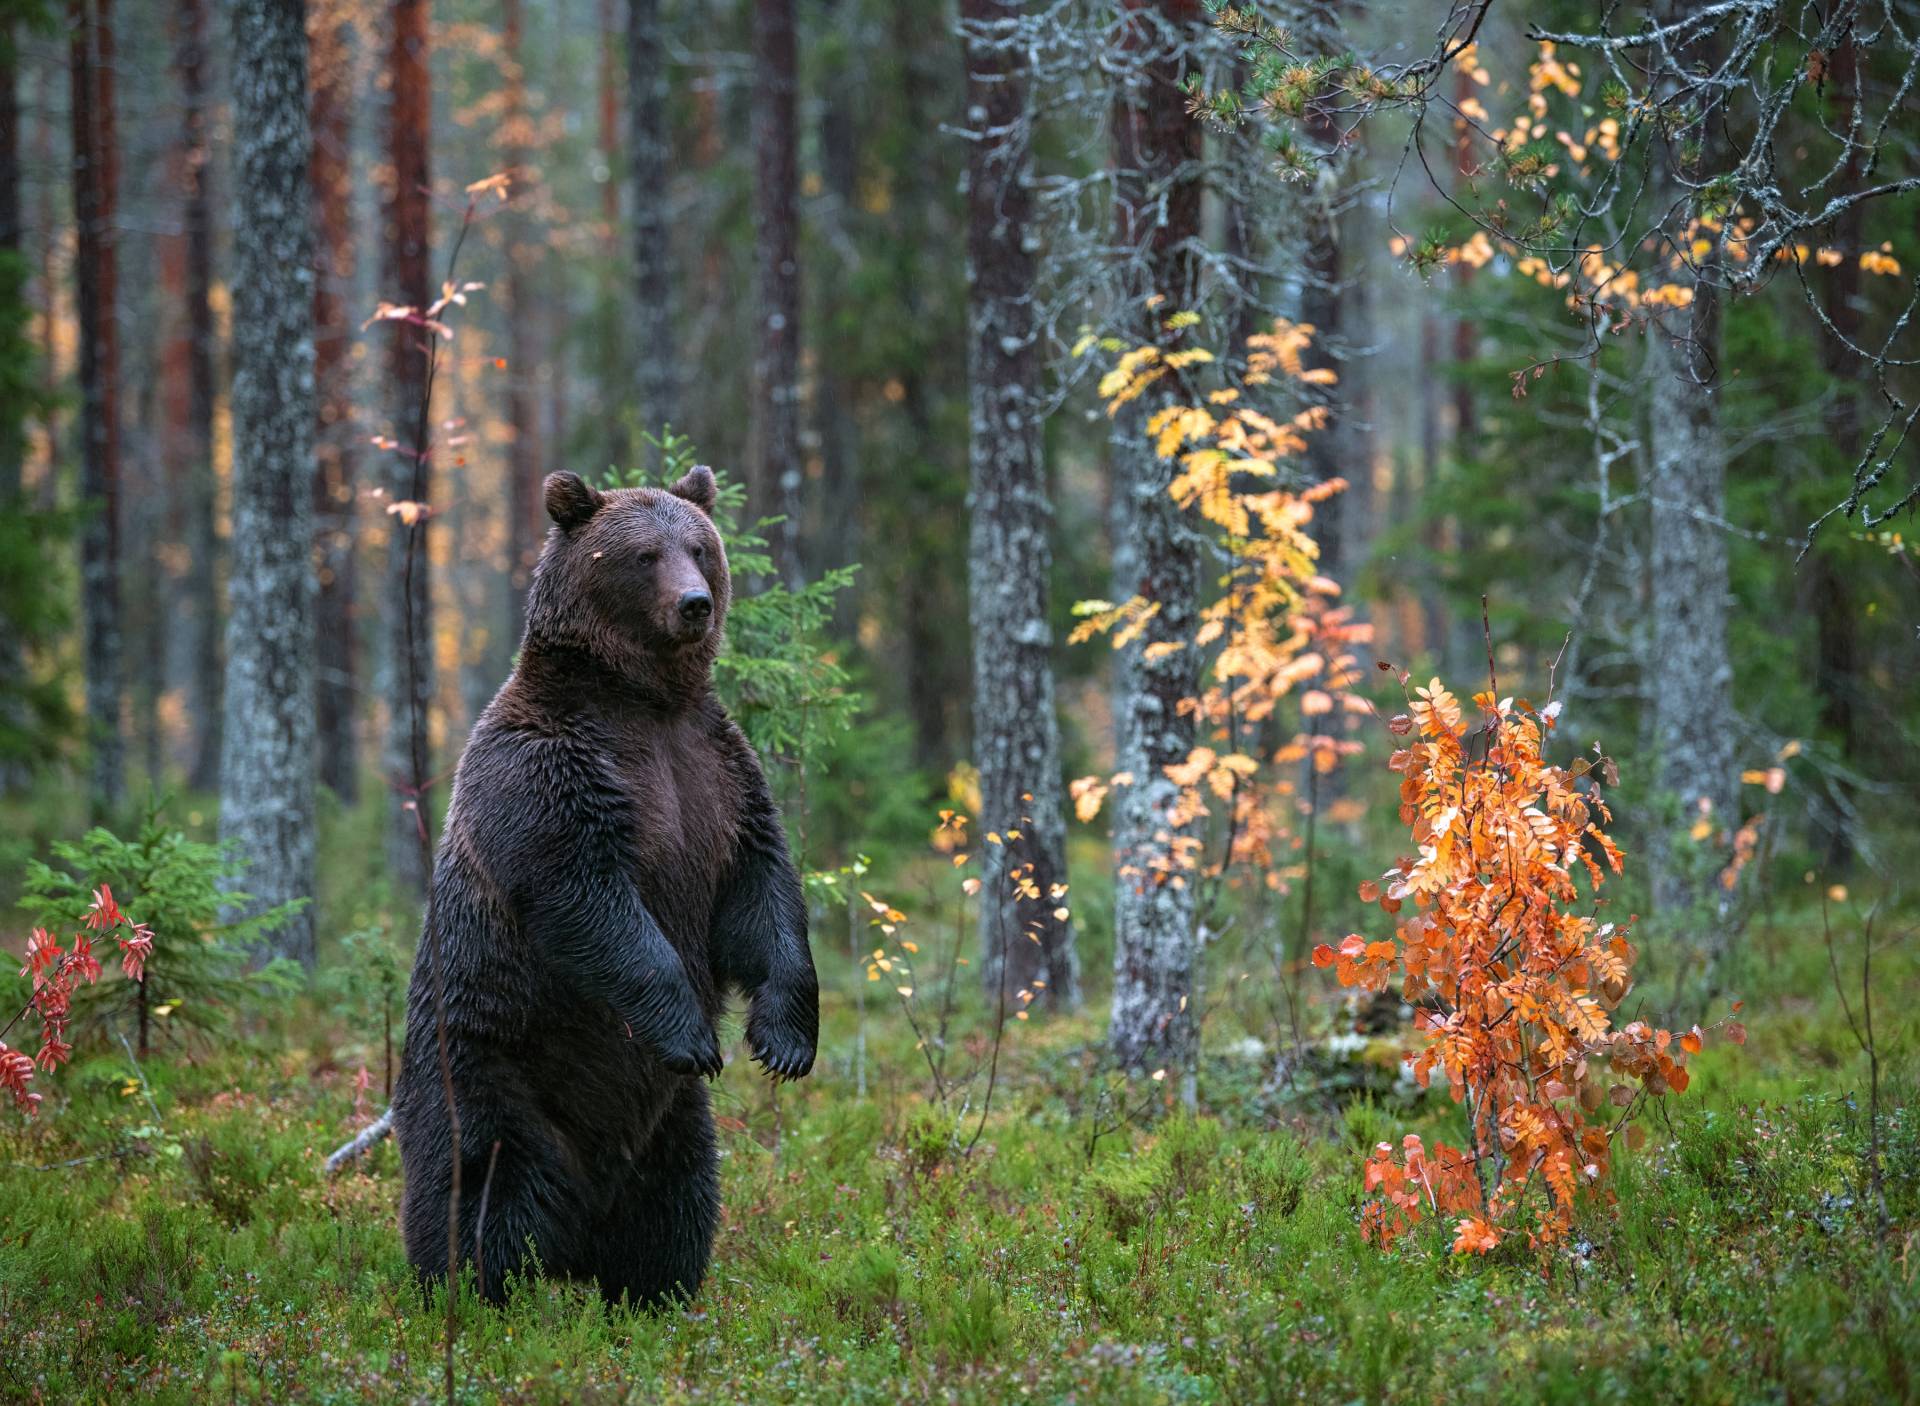 Papermoon Fototapete "Brown Bear in Autumn Forest" von Papermoon